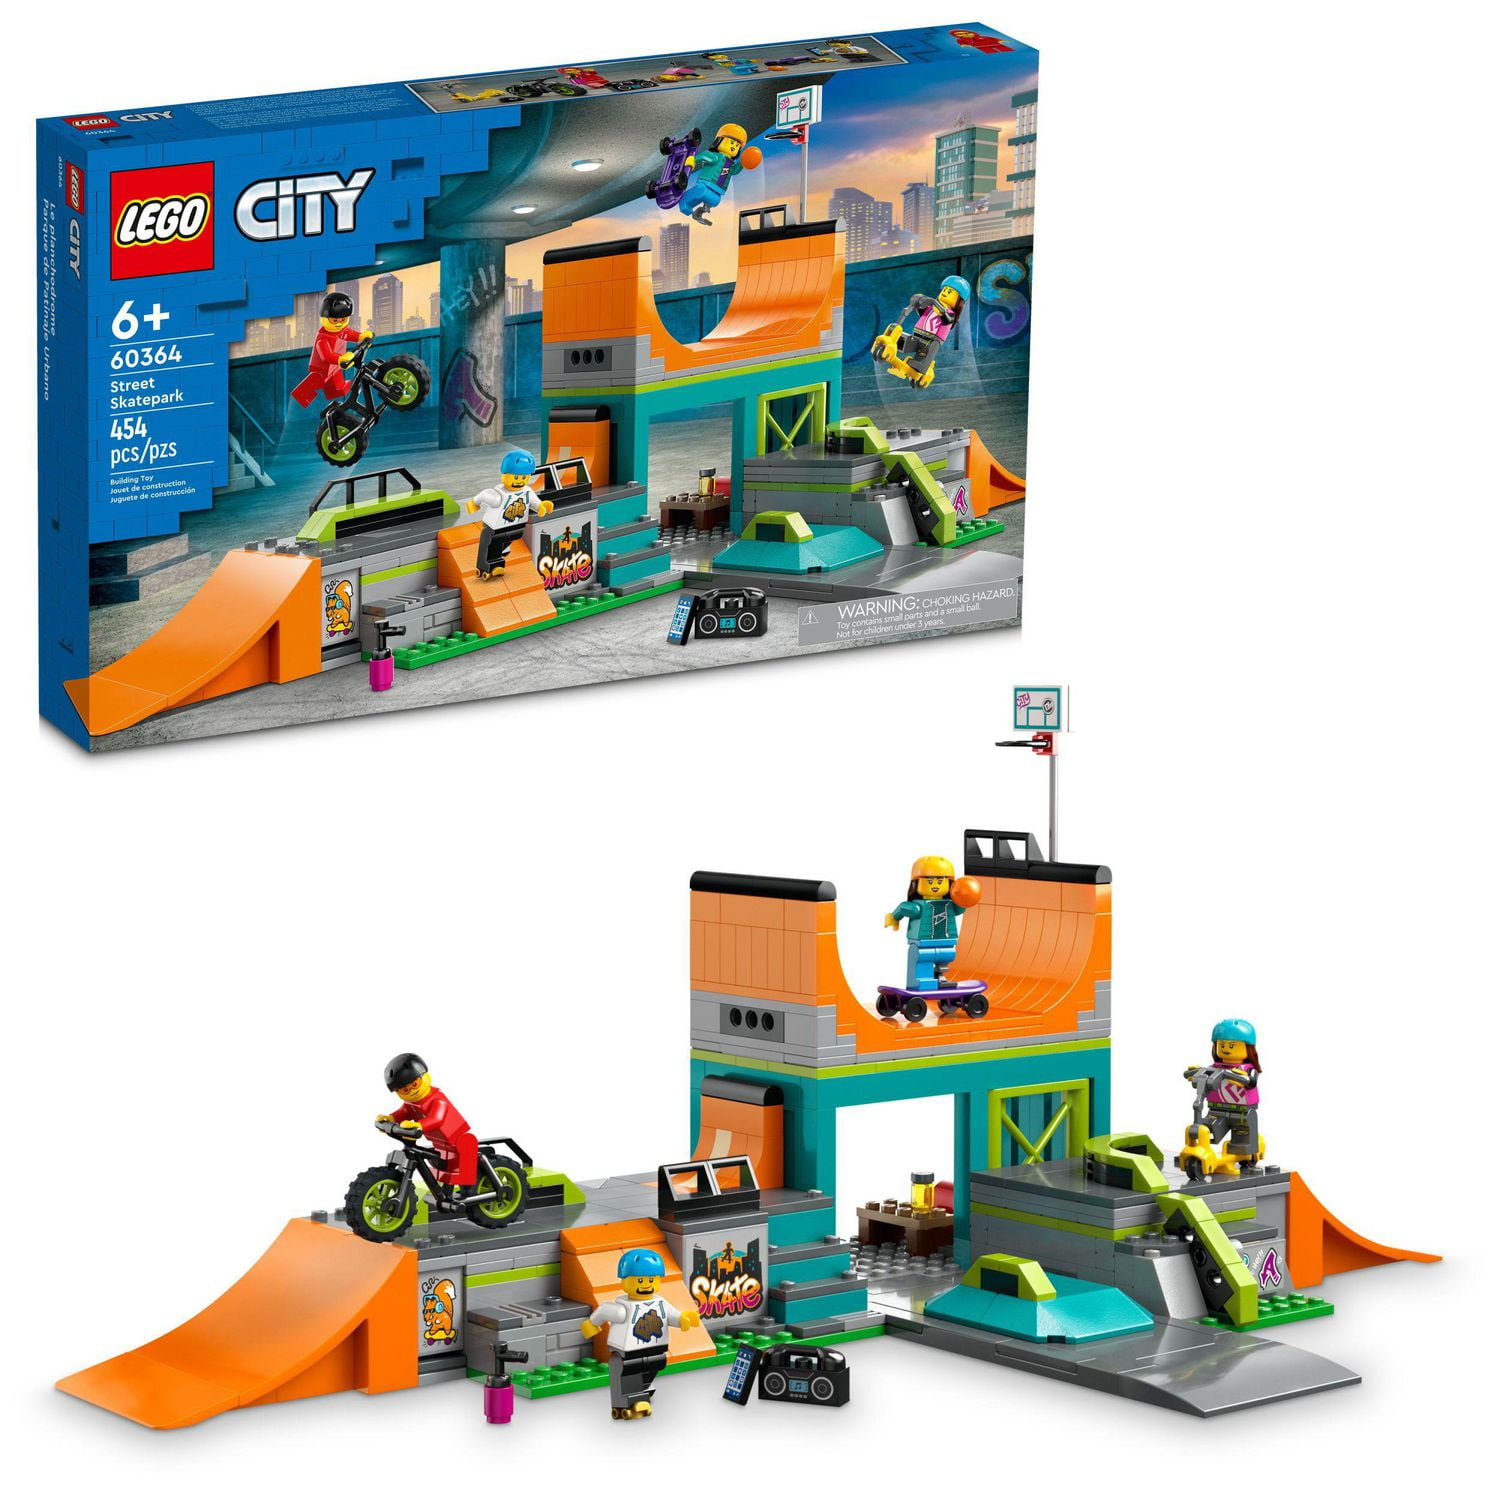 LEGO City Street Skate Park 60364 Building Toy Set, Includes a